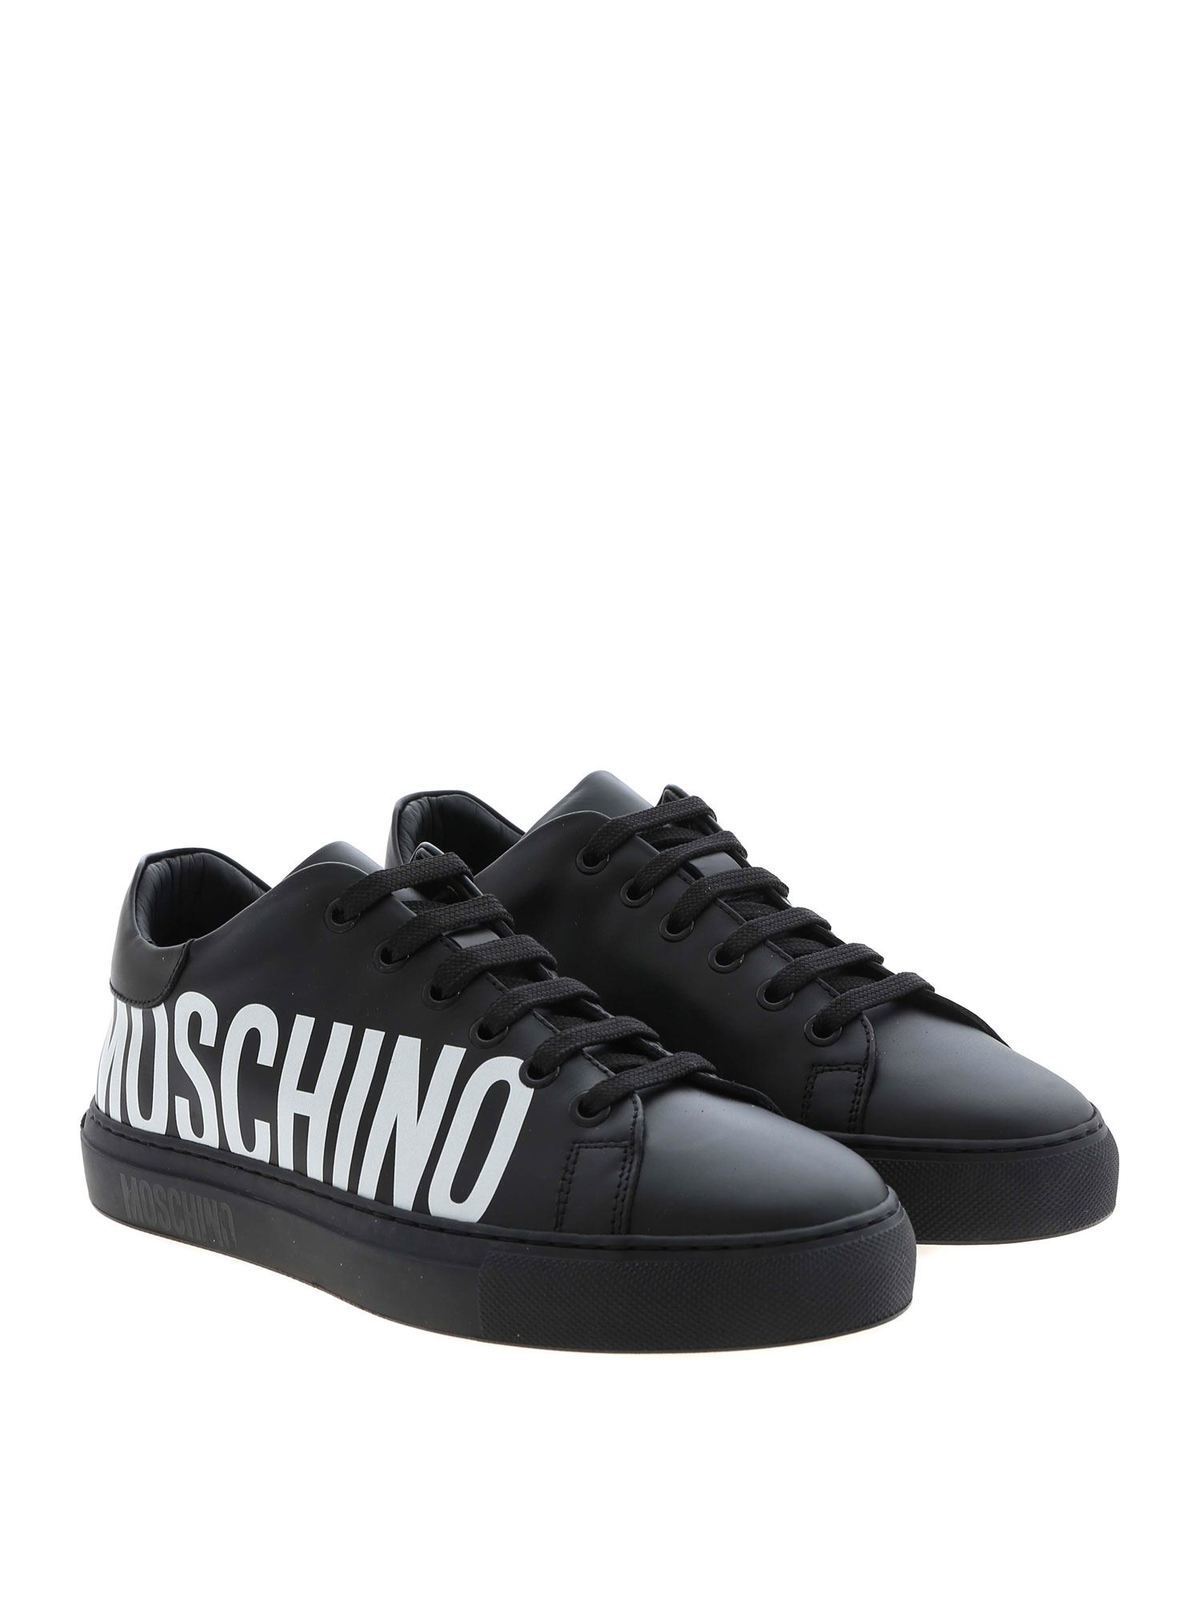 Moschino - Maxi logo print sneakers in 